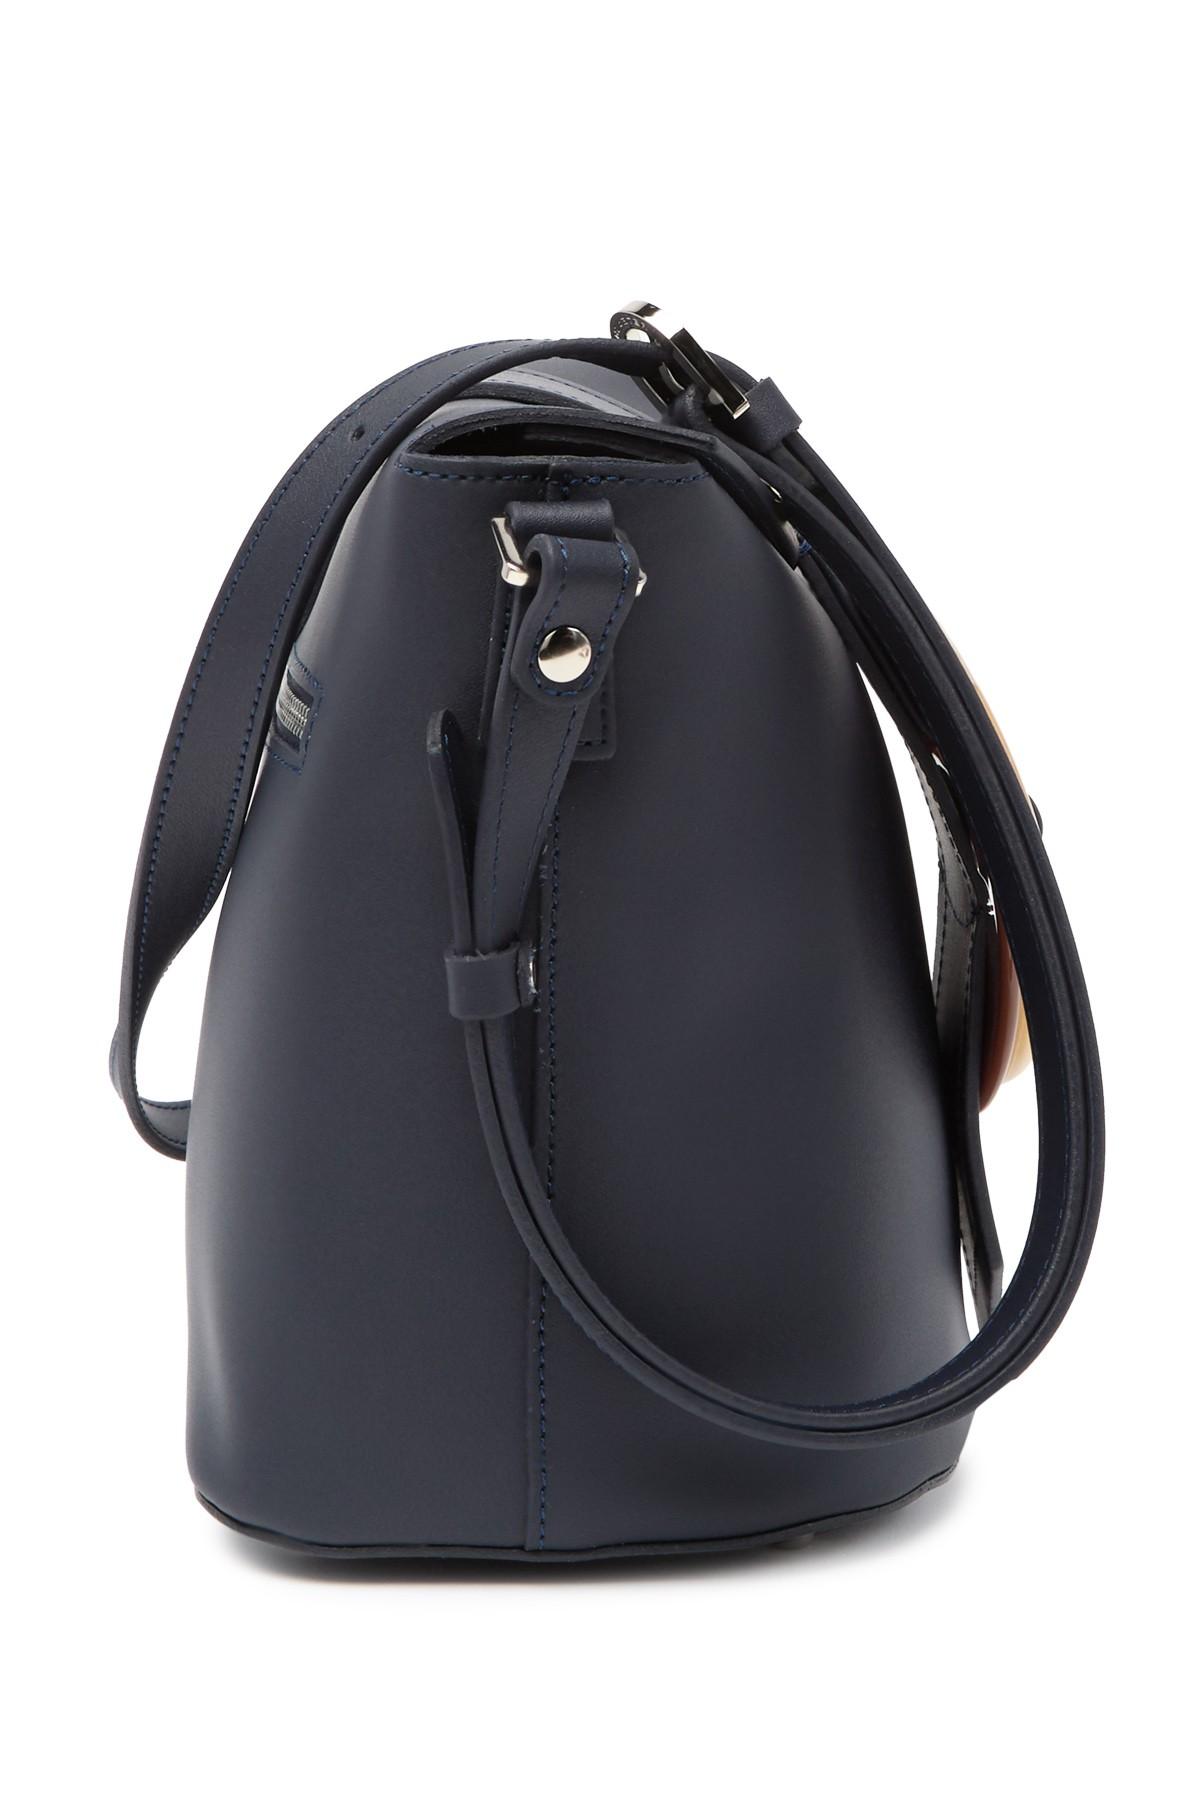 Lancaster Parisienne Gloria Leather Shoulder Bag in Dark Blue (Blue) - Lyst